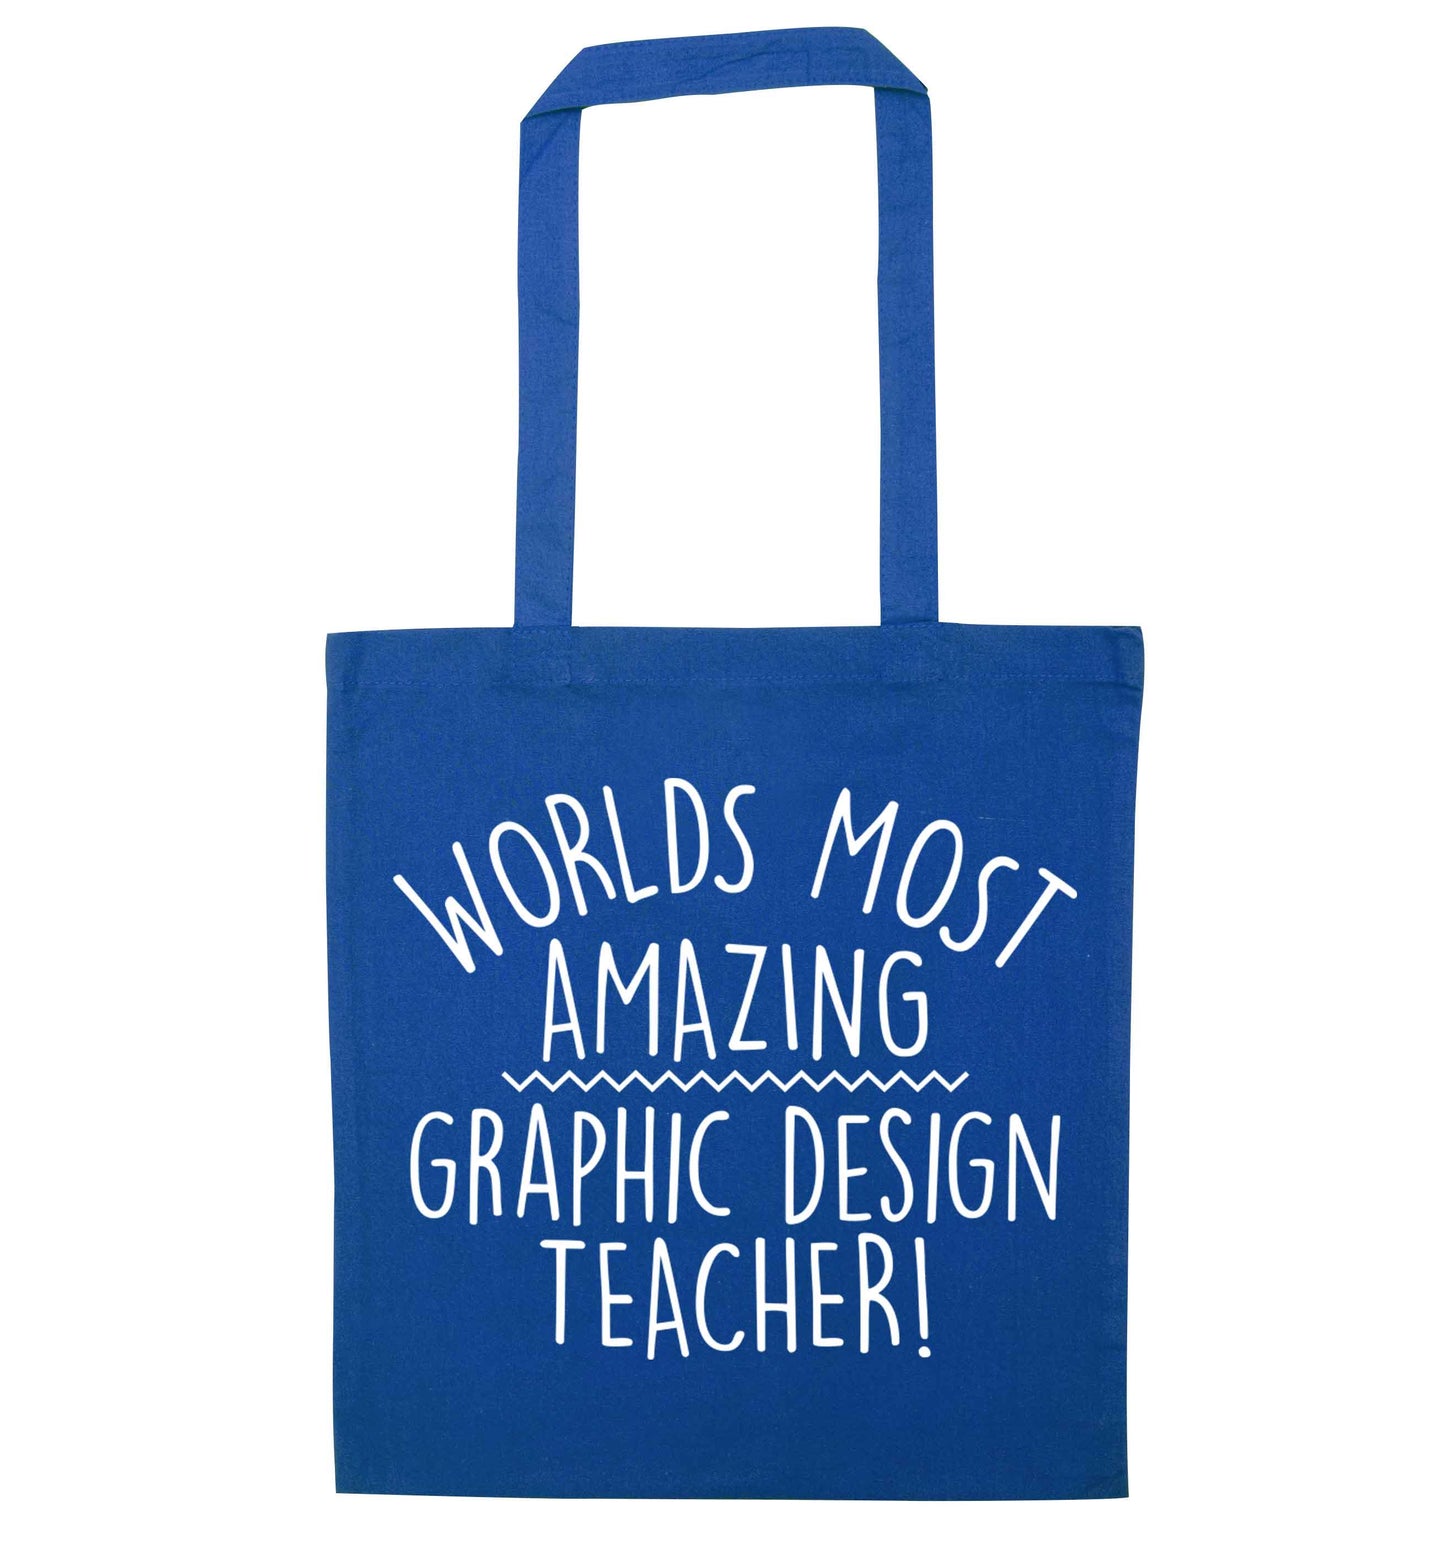 Worlds most amazing graphic design teacher blue tote bag